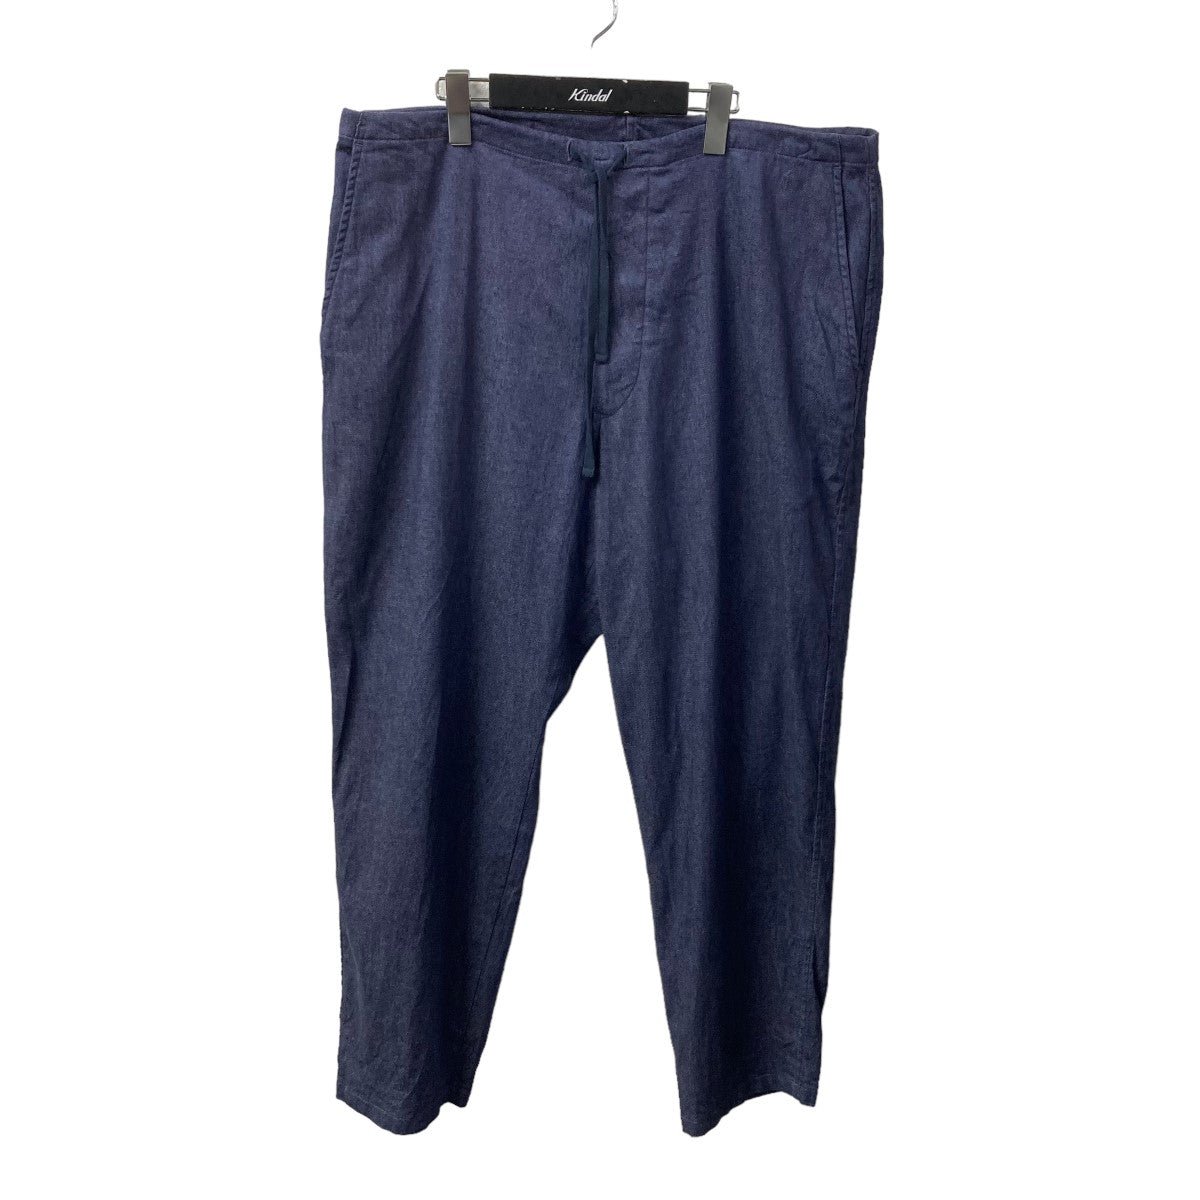 Comoli リネンコットンドローストリングパンツ サイズ3 Bluegray - パンツ